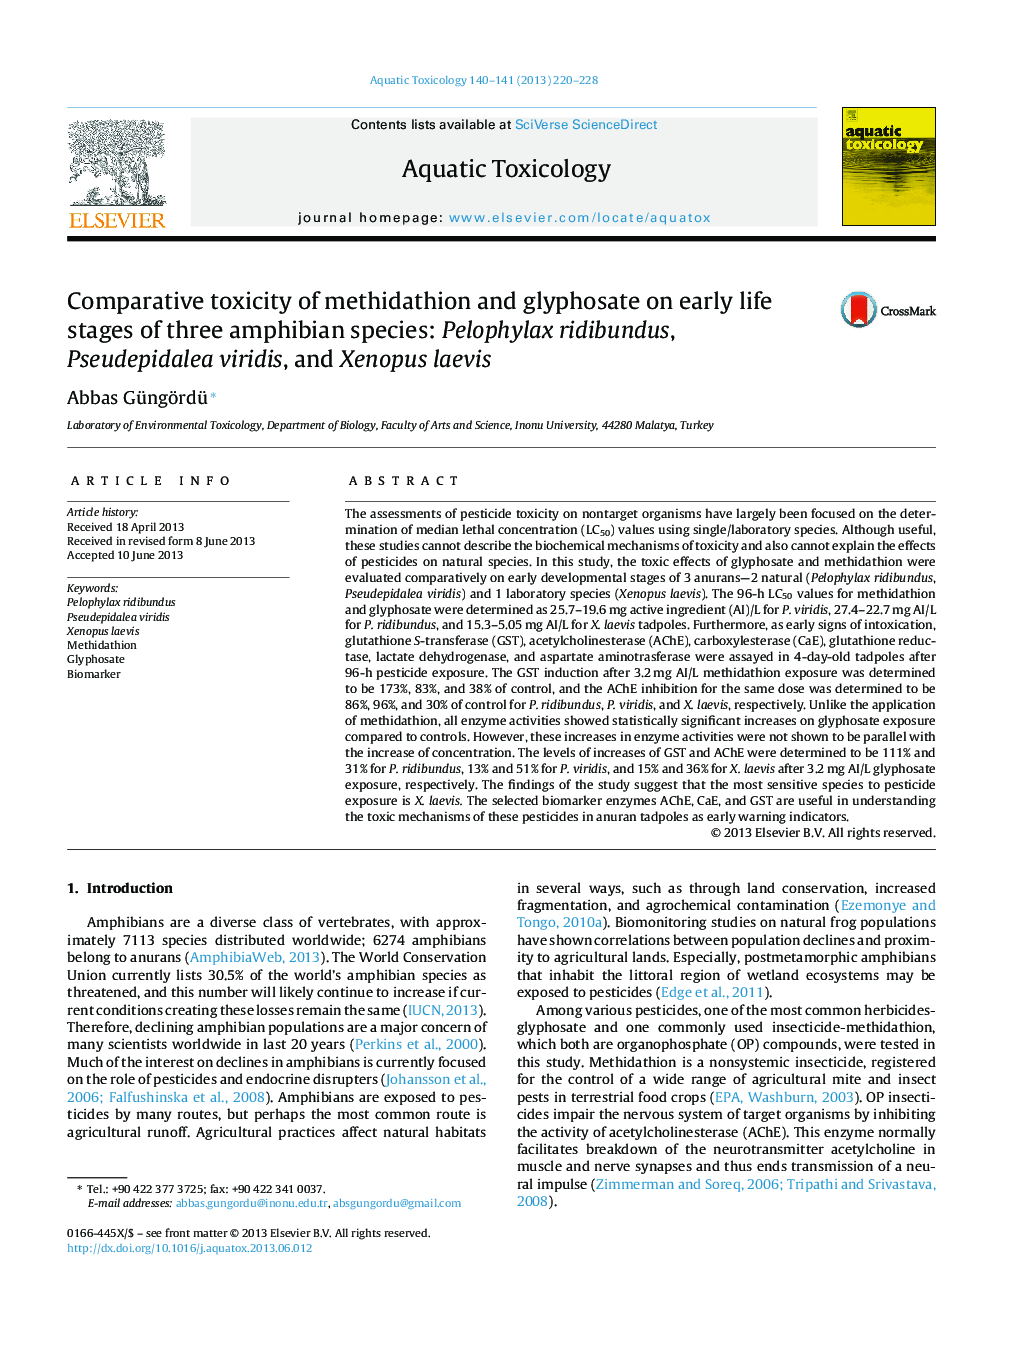 Comparative toxicity of methidathion and glyphosate on early life stages of three amphibian species: Pelophylax ridibundus, Pseudepidalea viridis, and Xenopus laevis